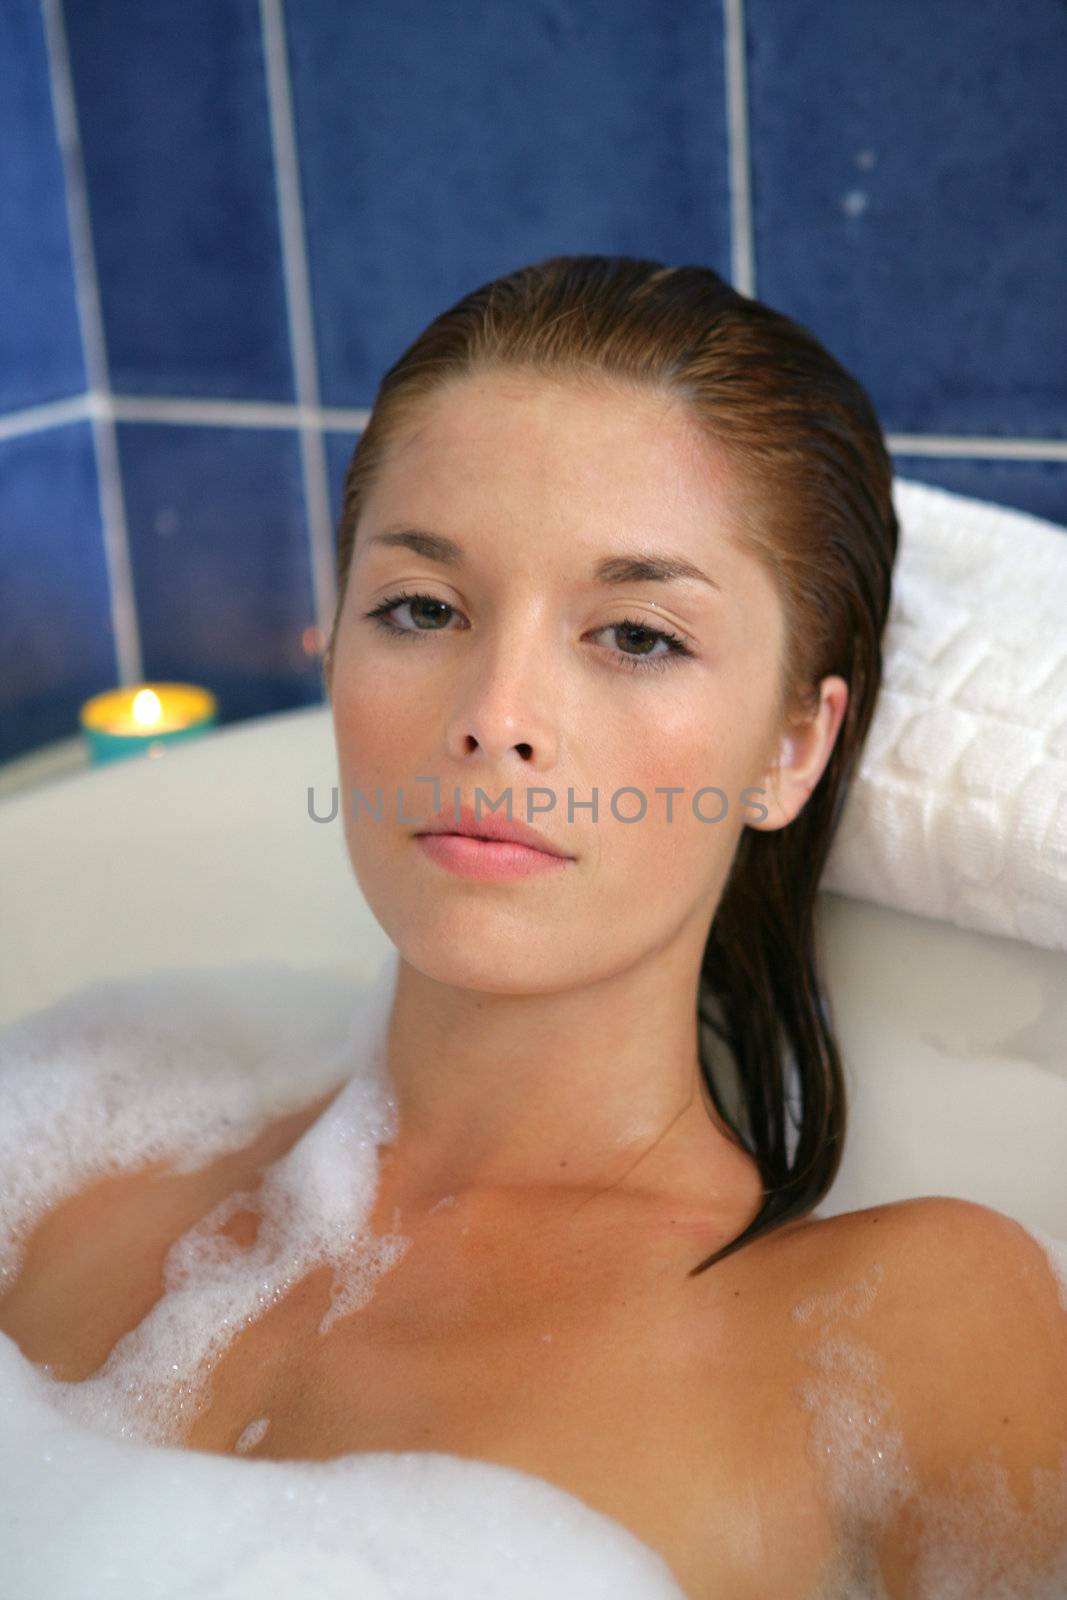 Woman having a bubble bath by phovoir